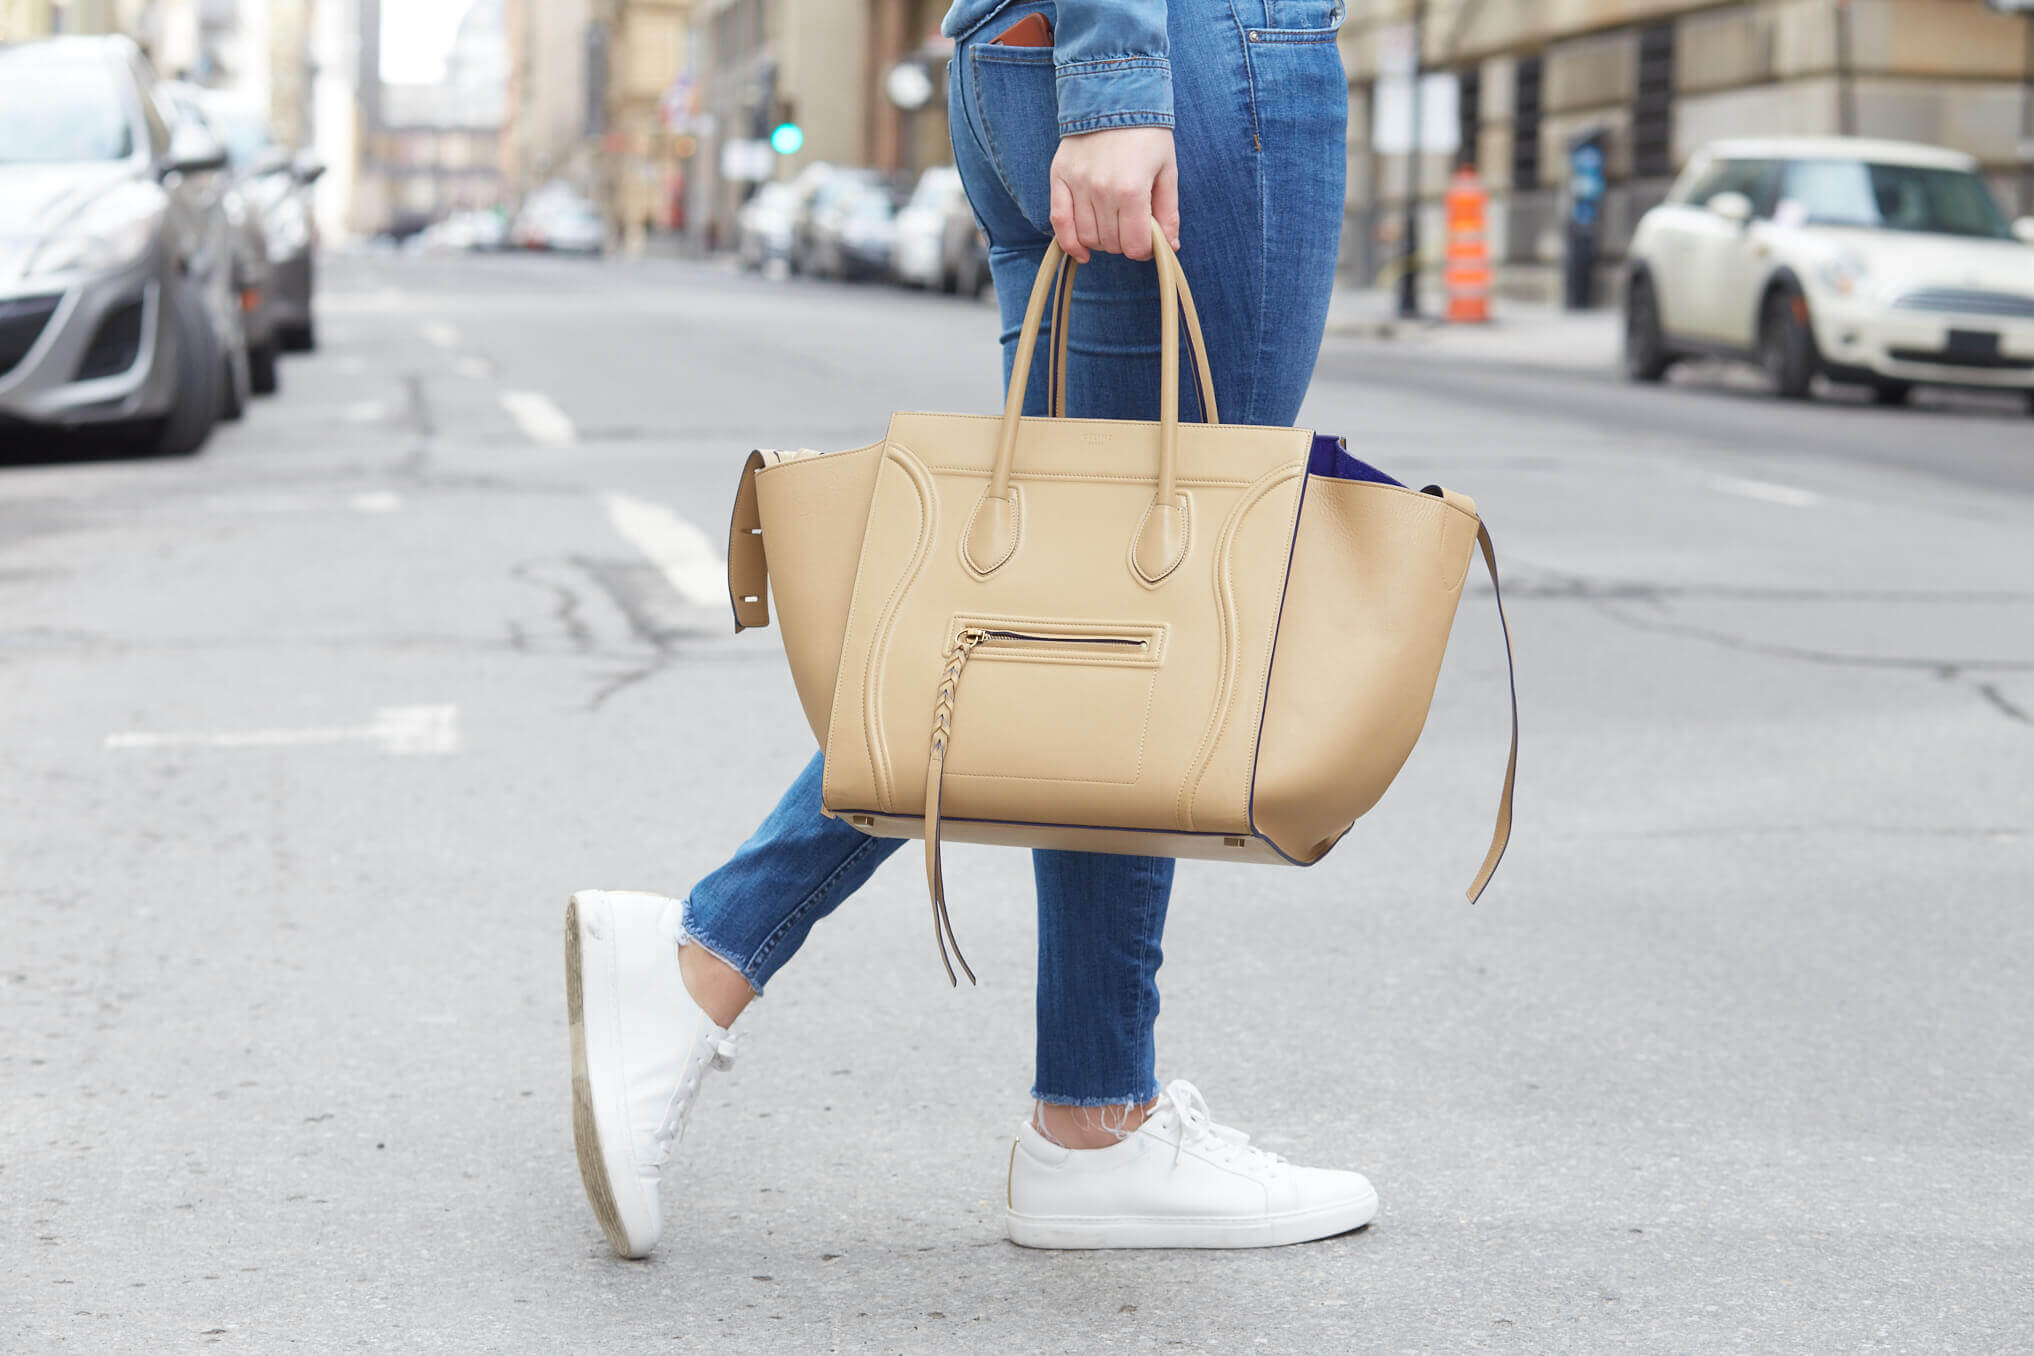 Designer Handbag Care Tips - Keep Your Designer Handbags for